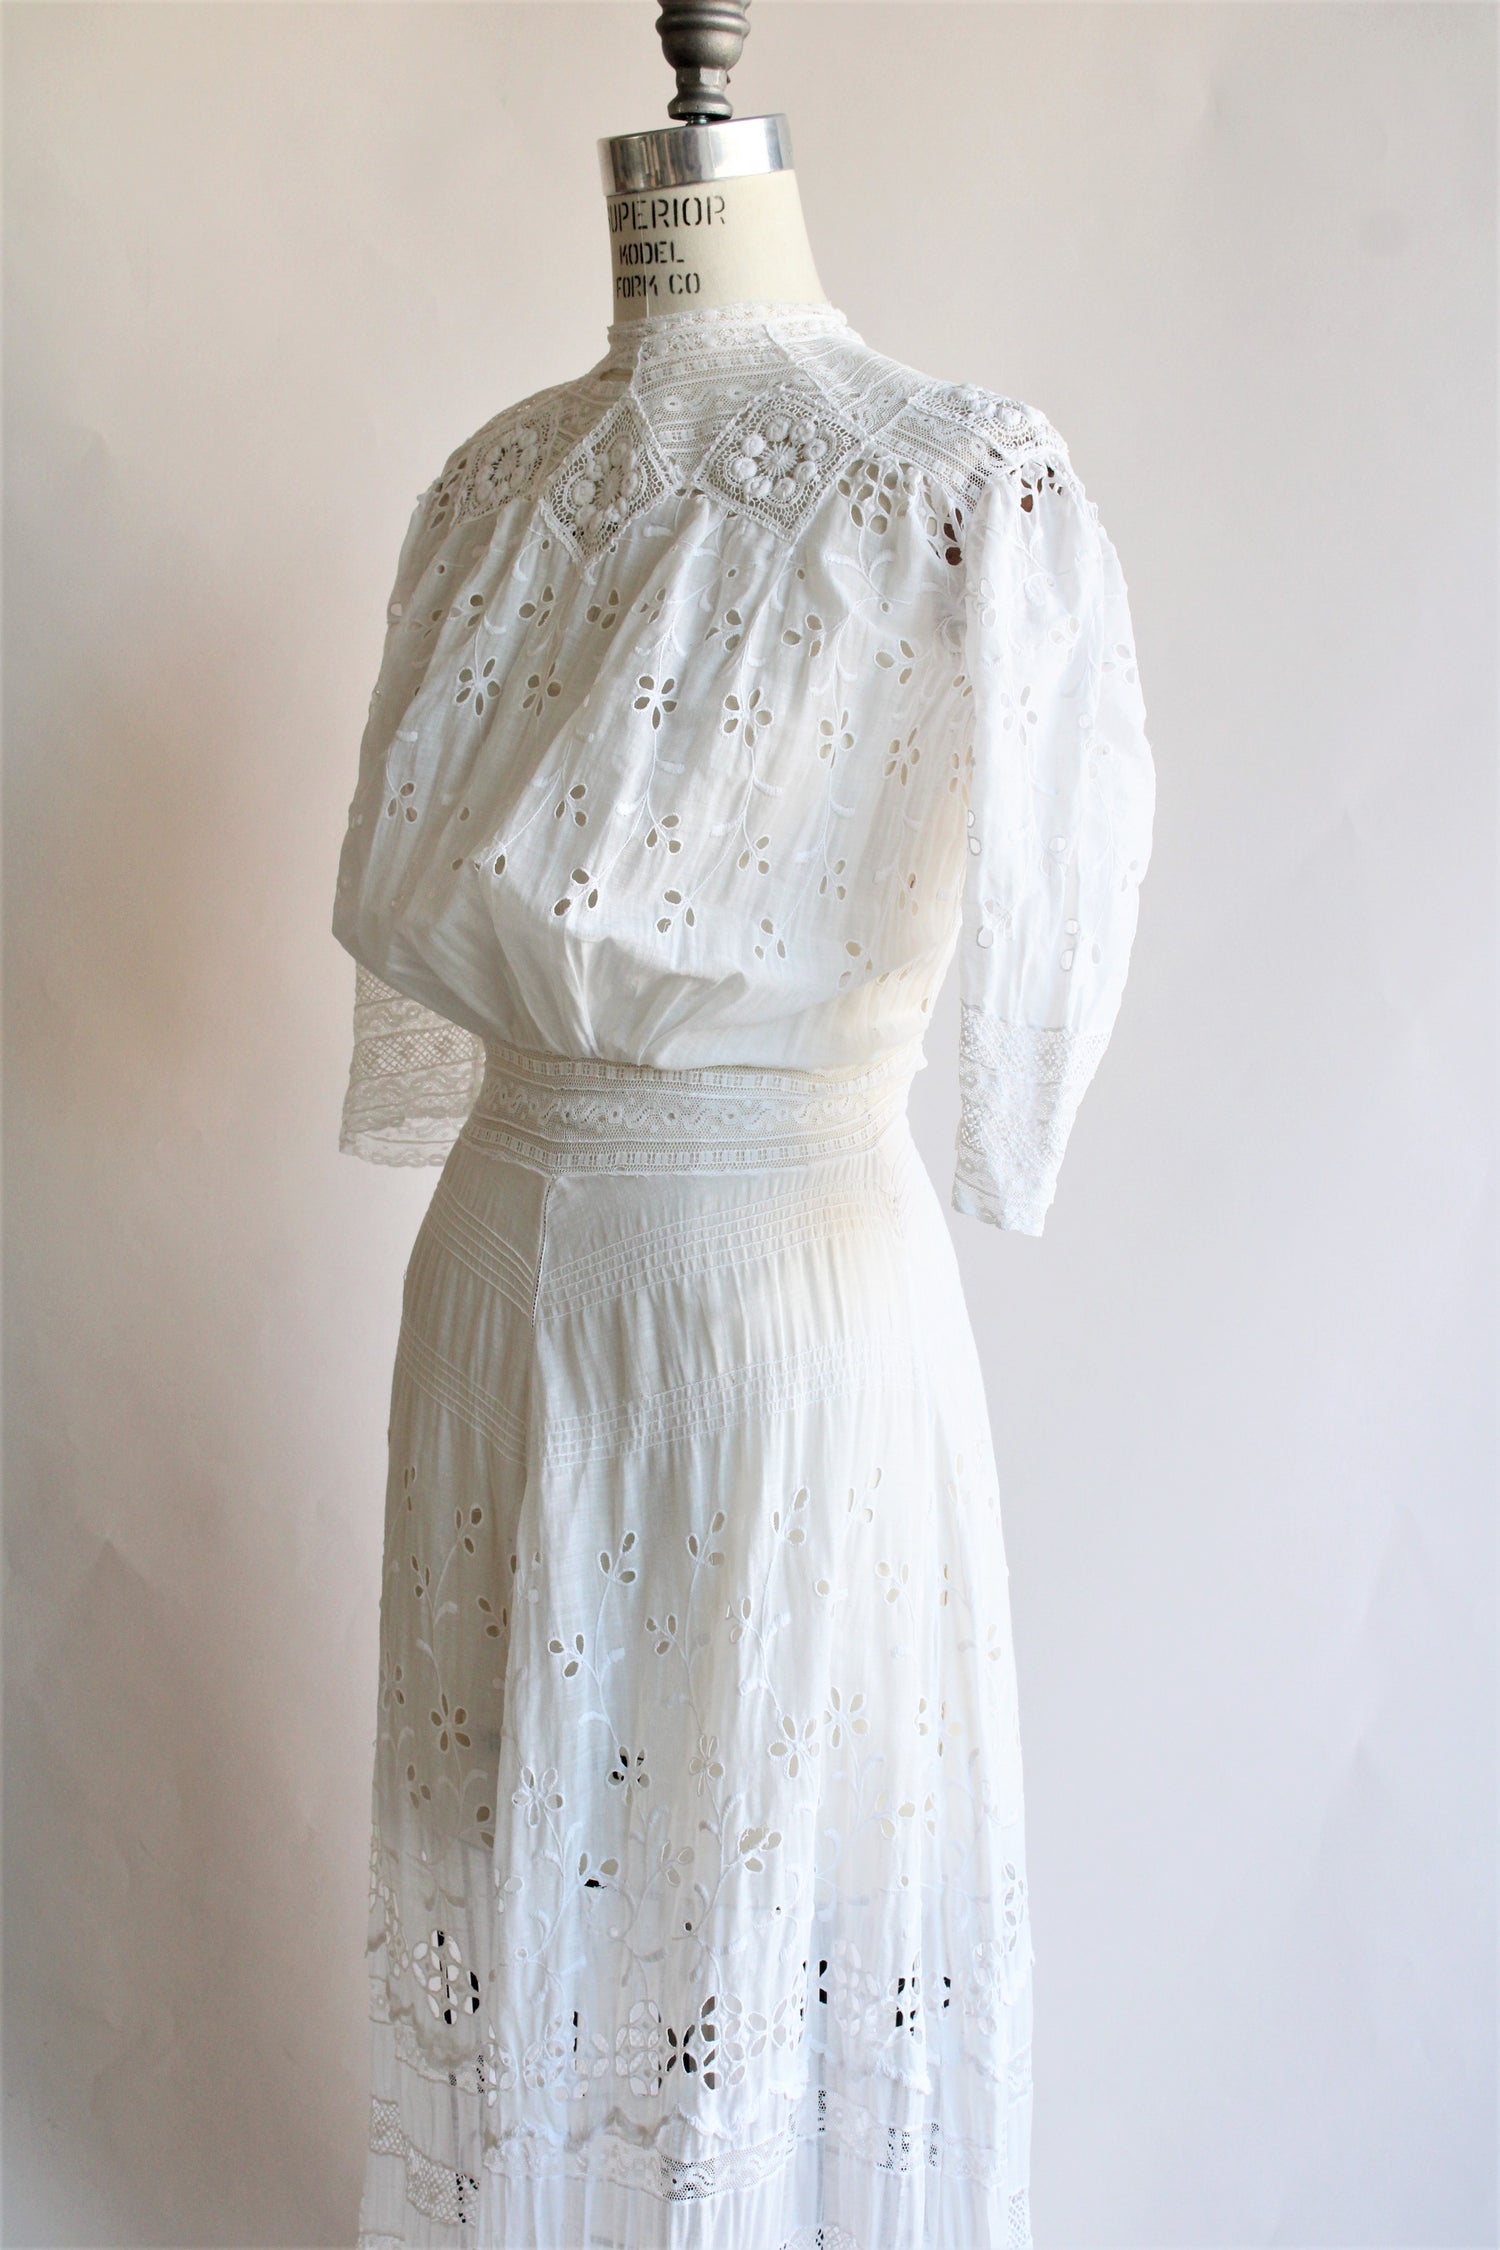 Vintage Antique 1900s Edwardian White Dress